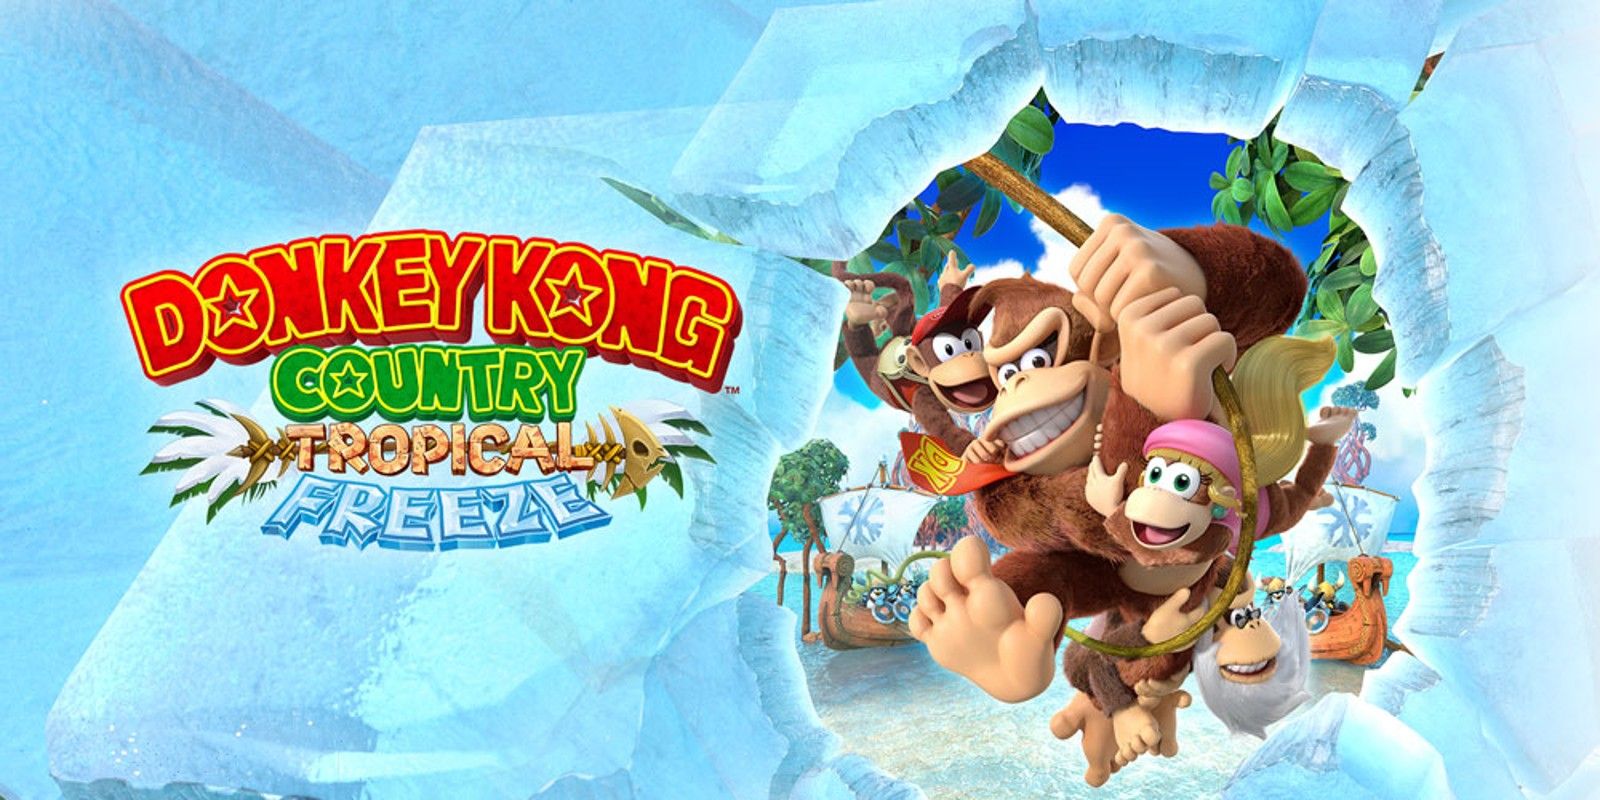 Donkey Kong Tropical Freeze promo art with logo